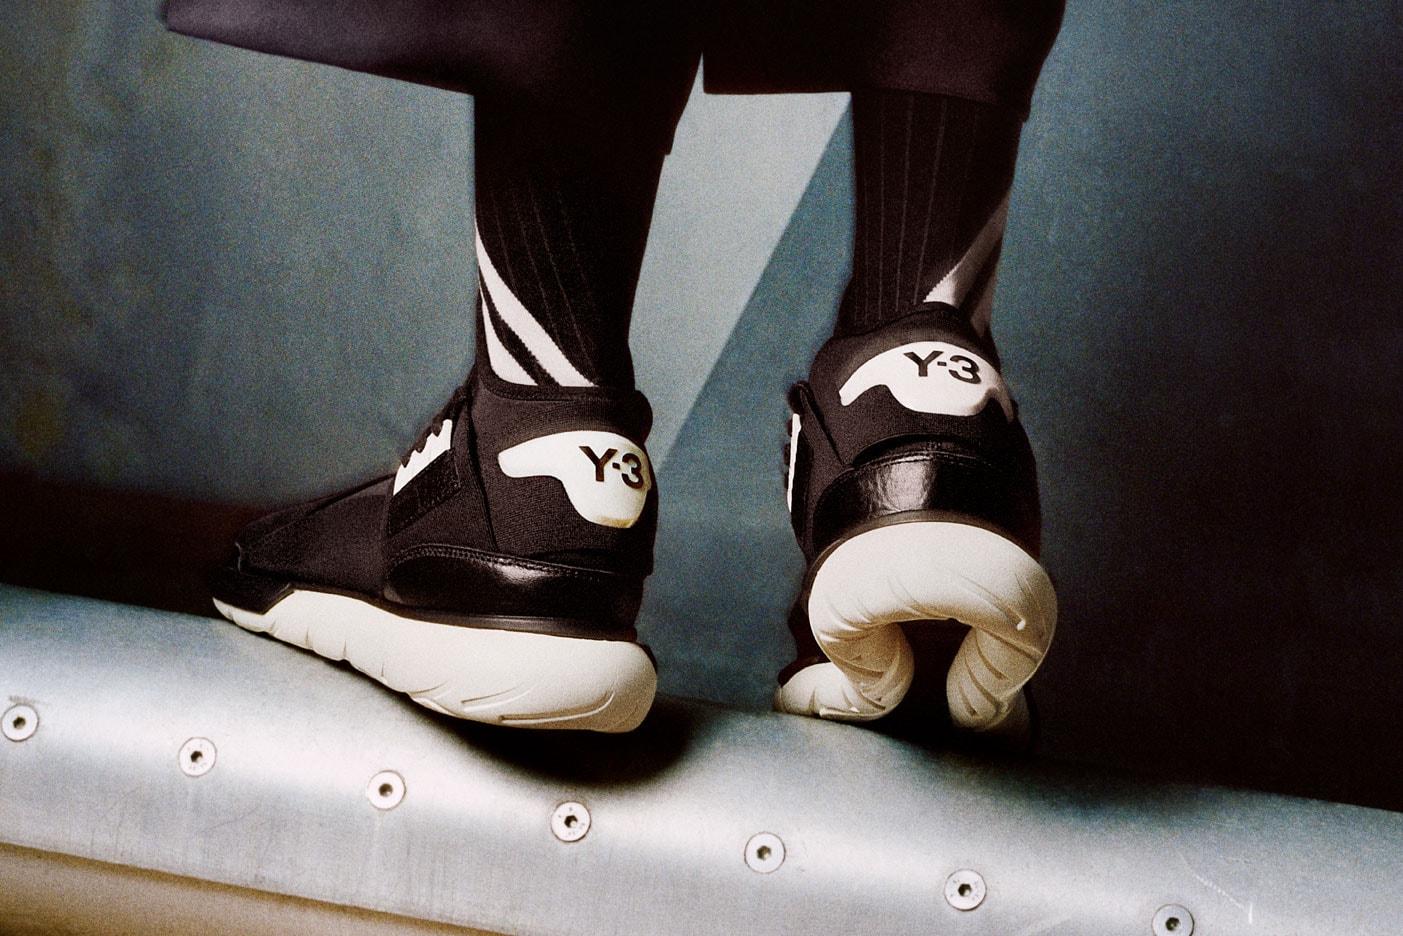 adidas Yohji Yamamoto Y-3 Qasa High black white sneaker tubular